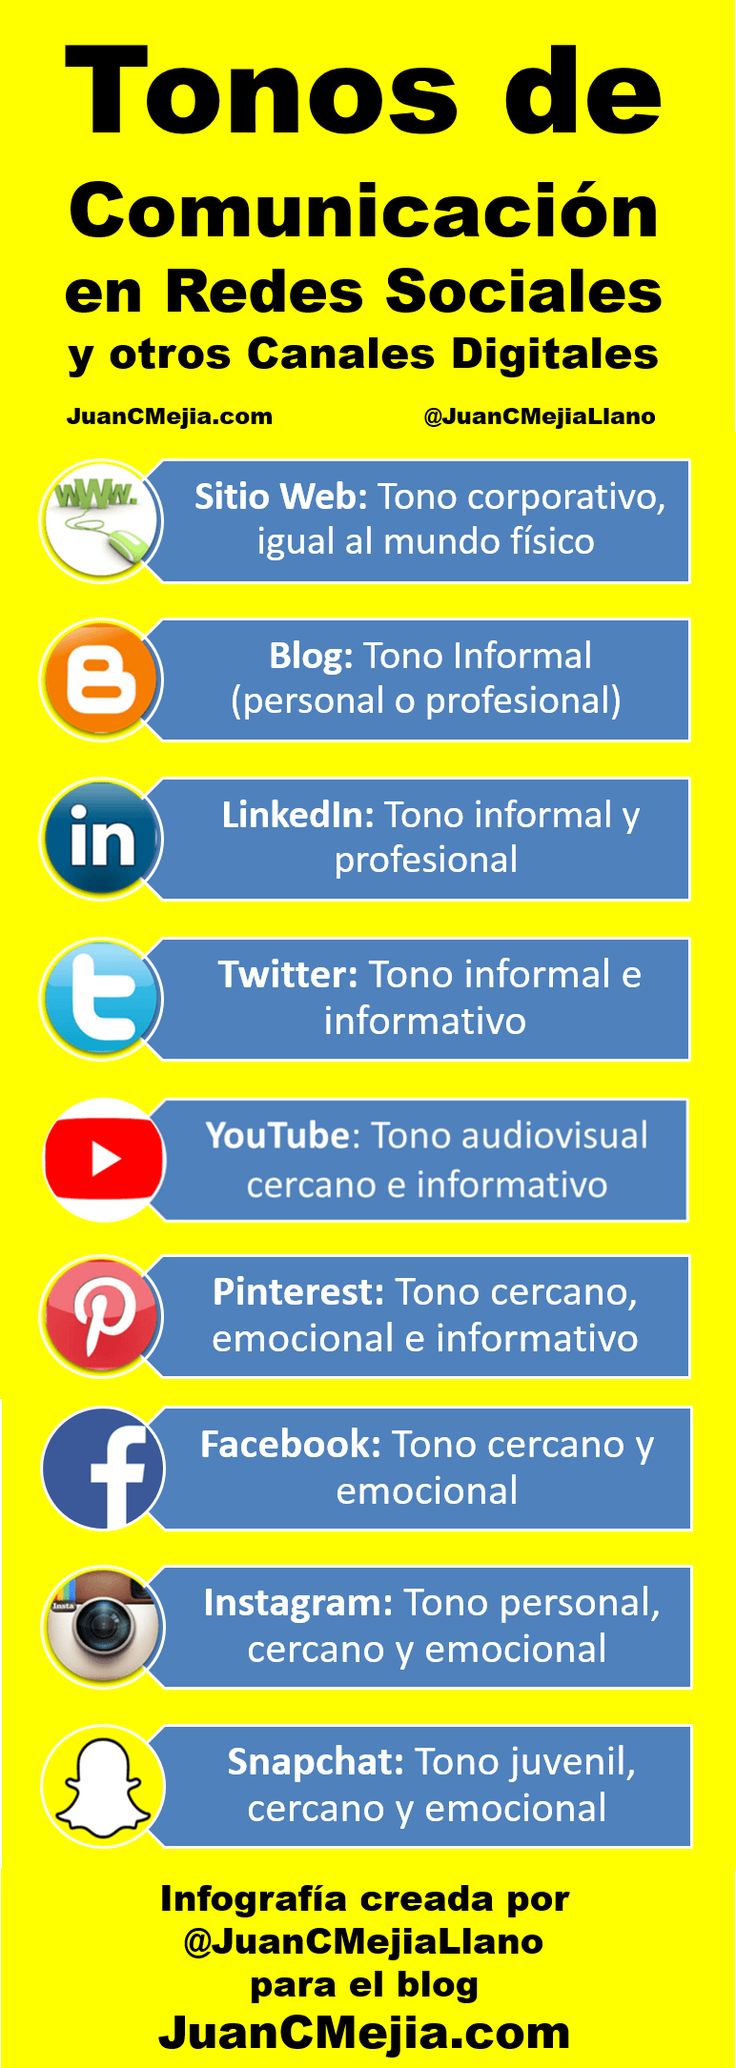 Advertising-Infographics-Tonos-de-comunicacion-en-Redes-Sociales-infografia Advertising Infographics : Tonos de comunicación en Redes Sociales #infografia #infographic #socialmedia